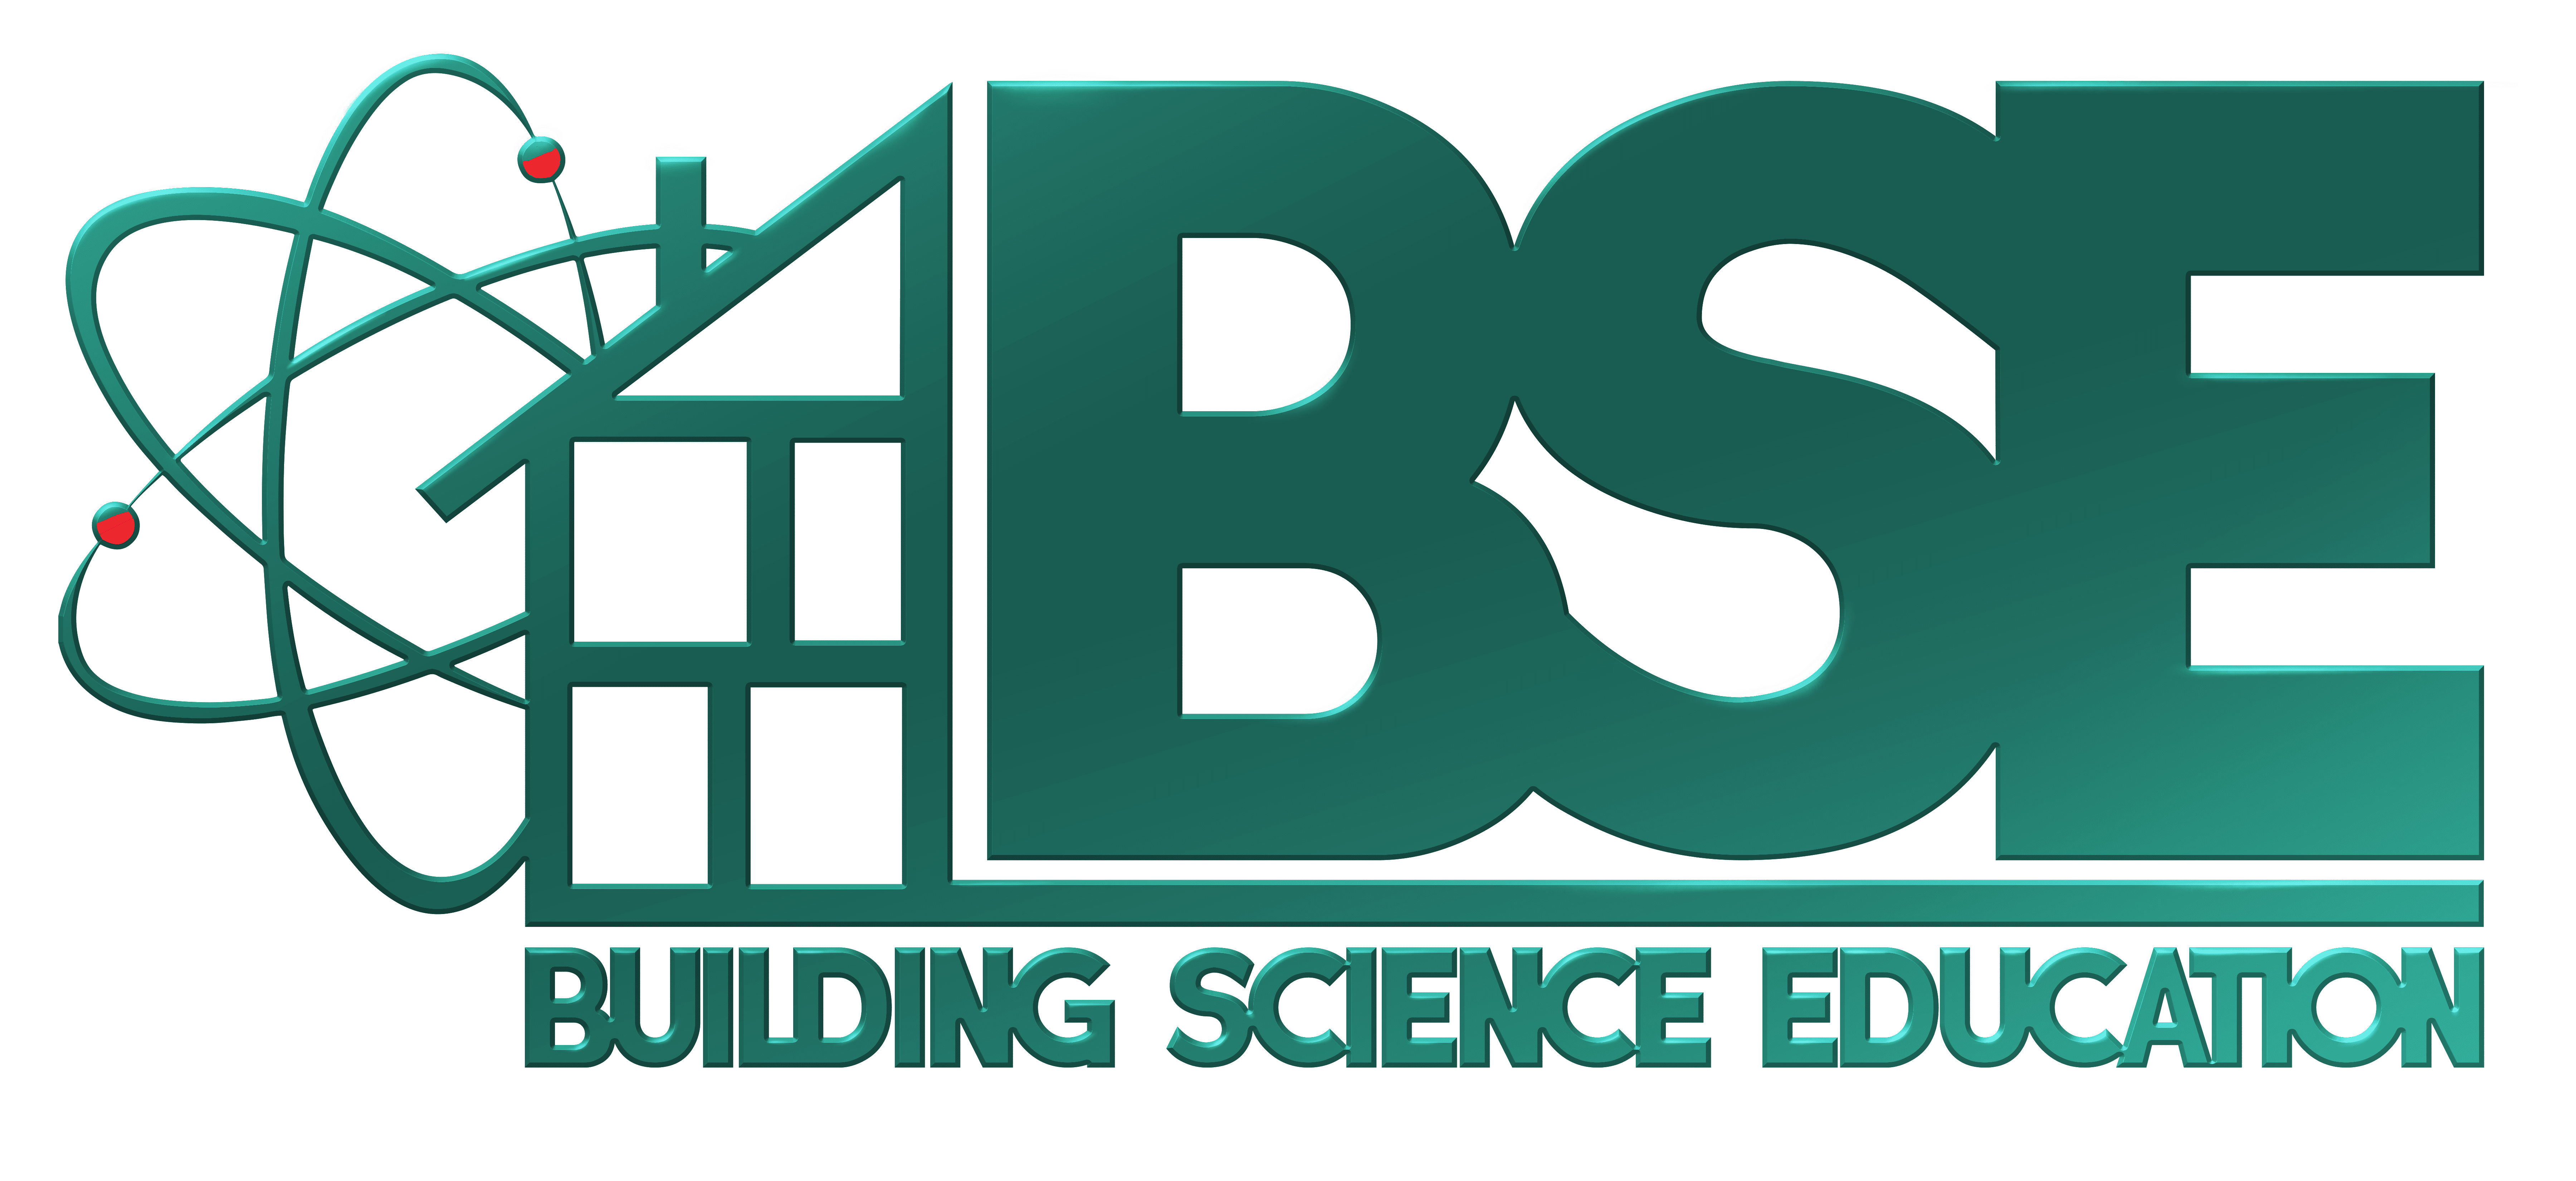 Building Science Education